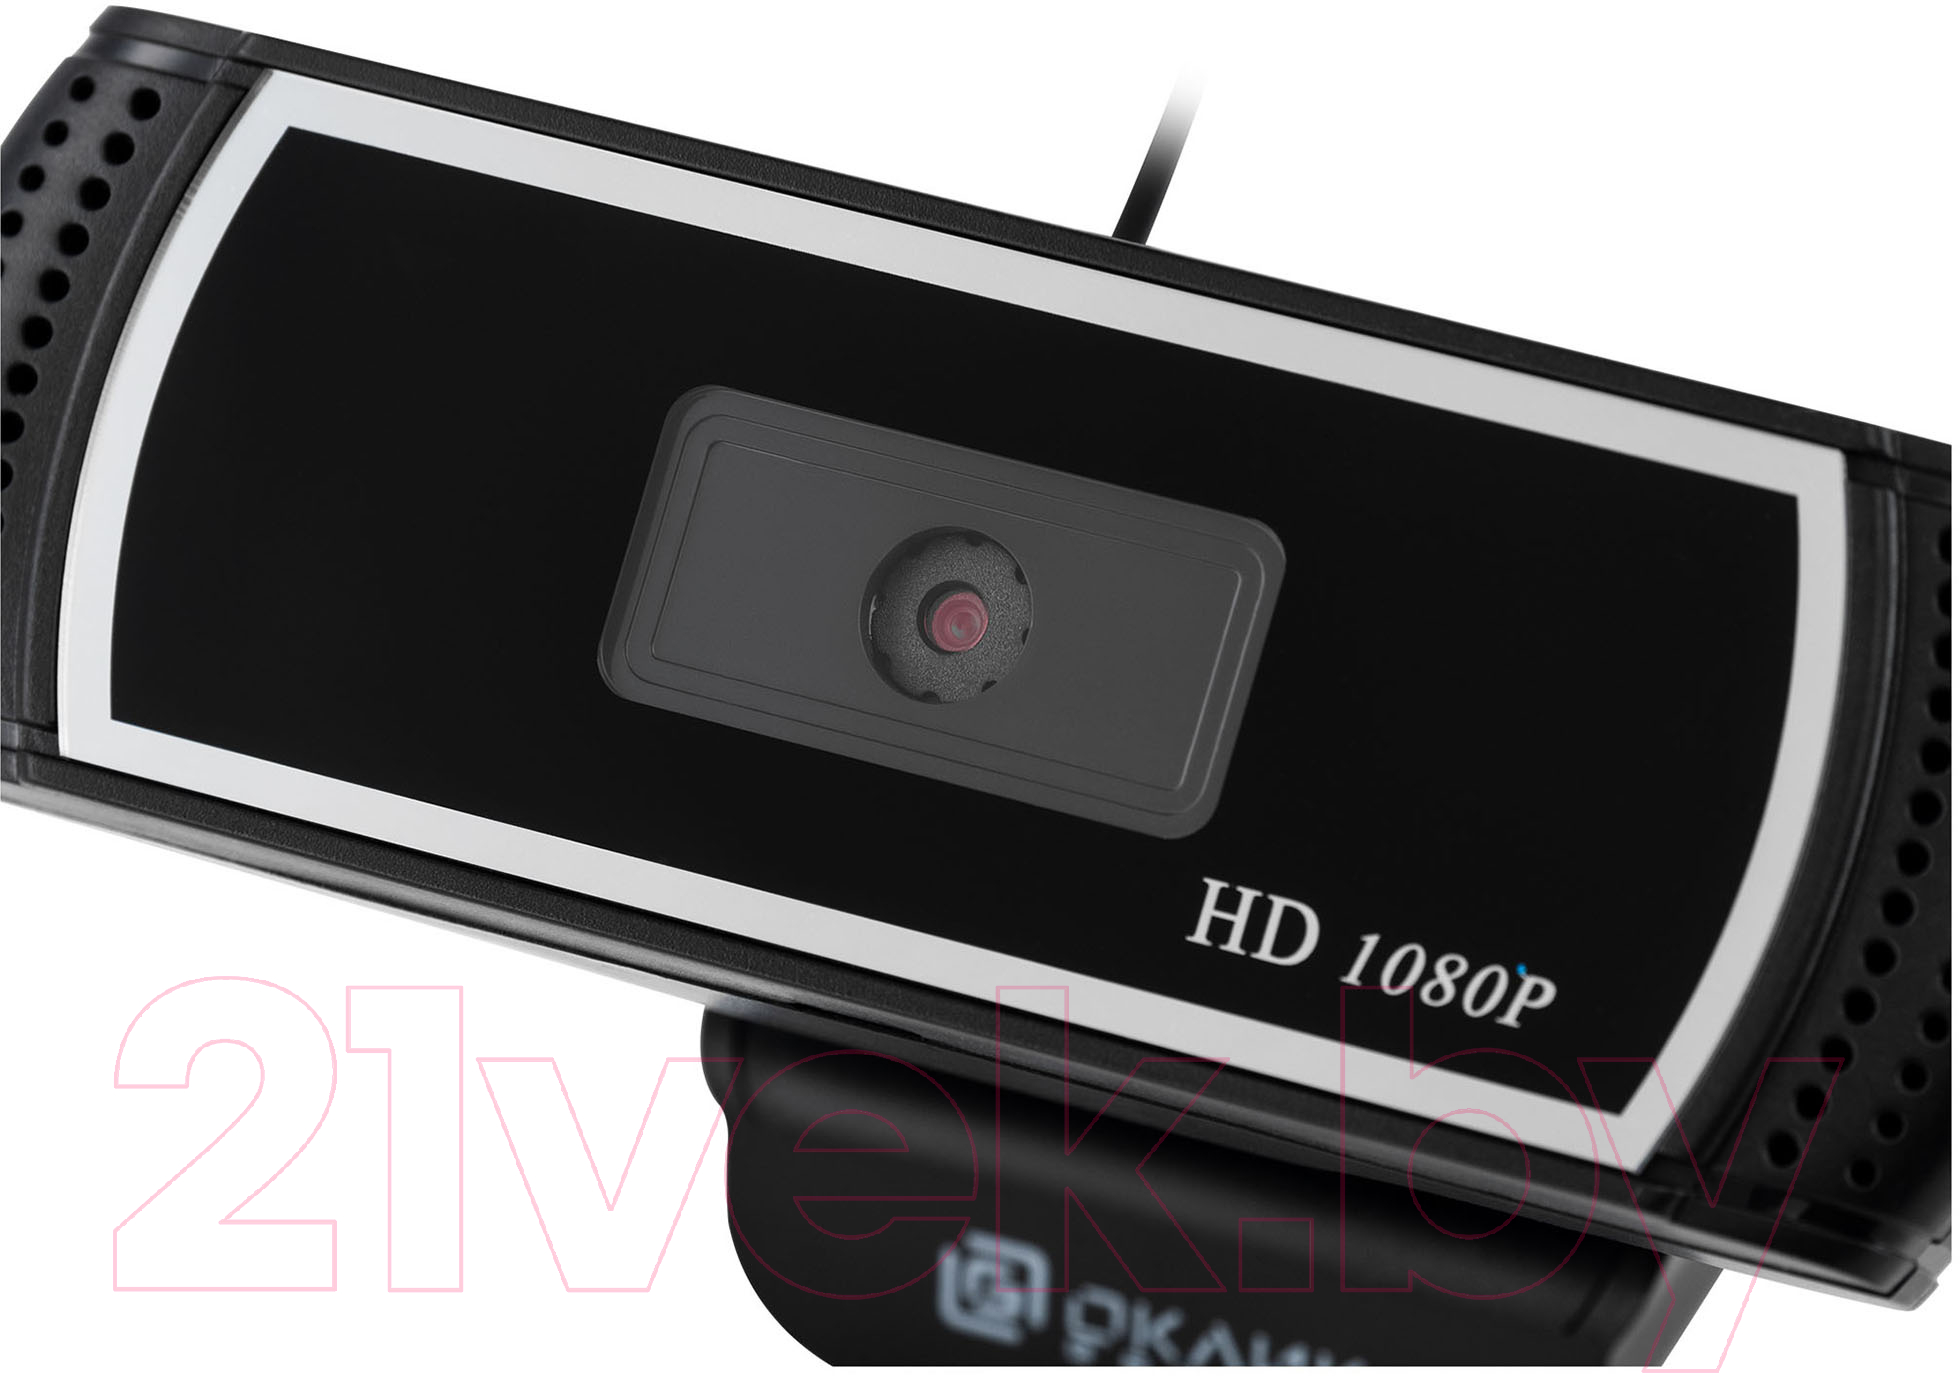 Веб-камера Oklick OK-C013FH